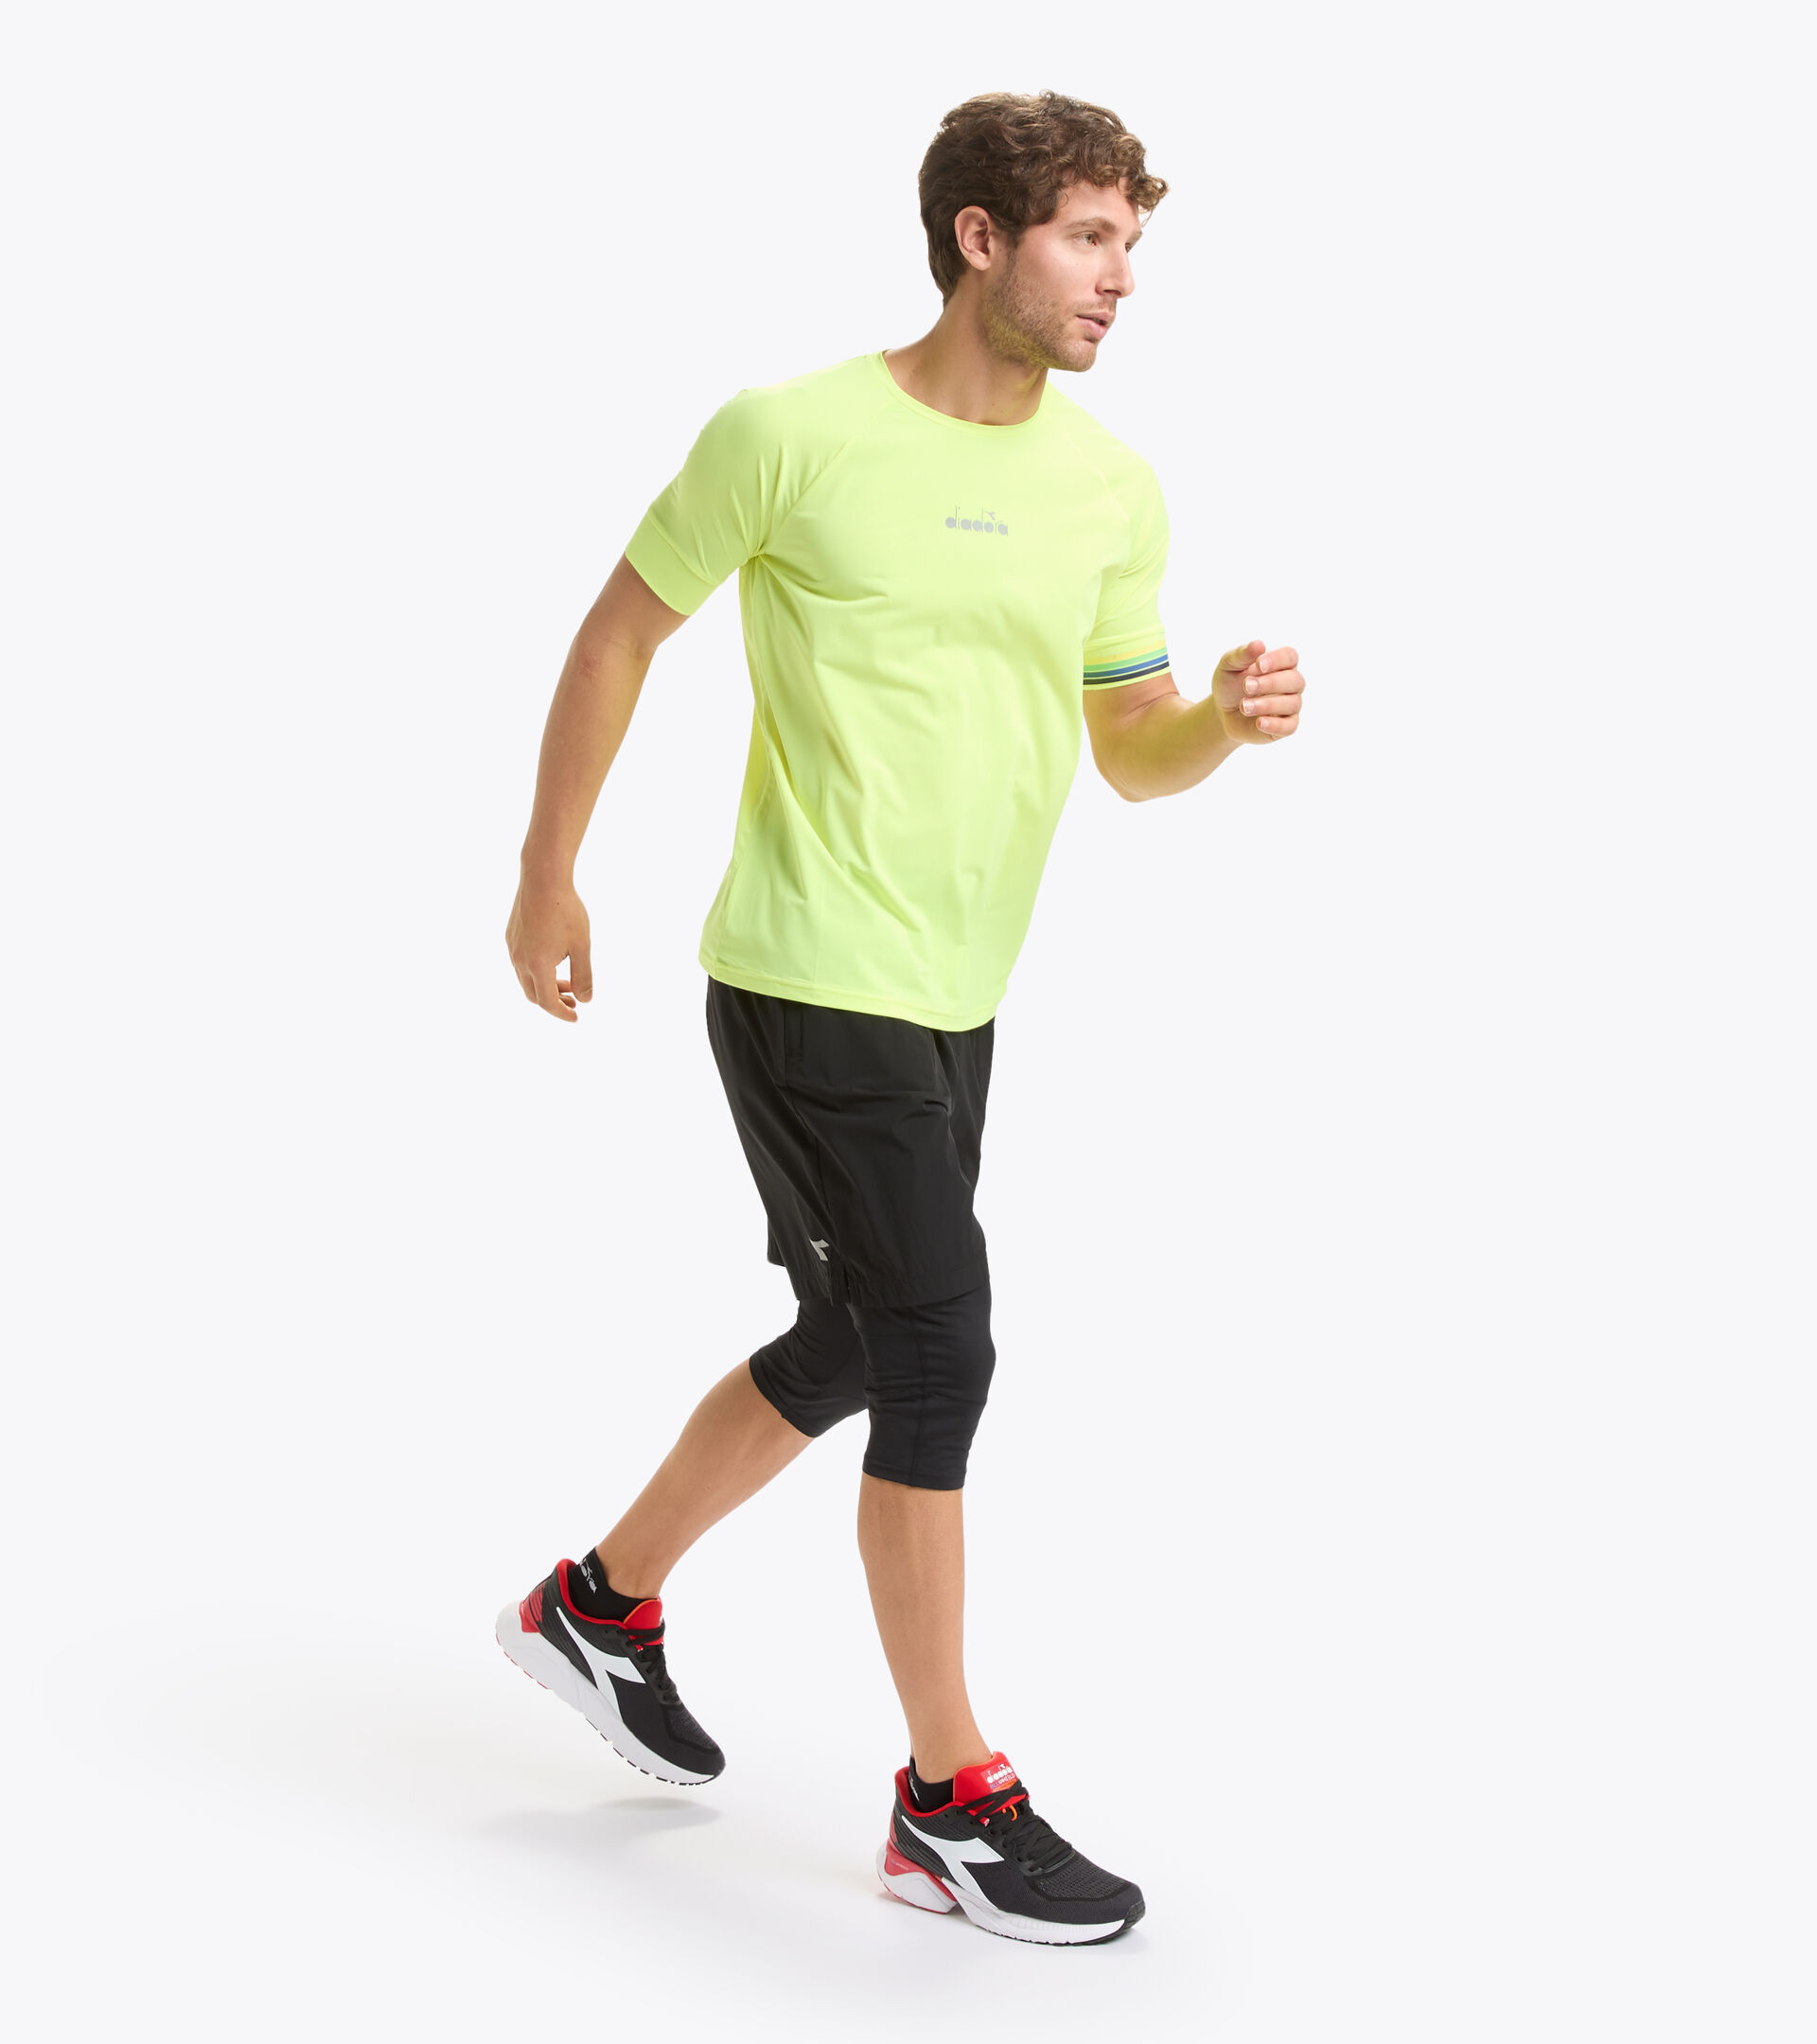 POWER SHORTS BE ONE Leggings with detachable shorts running set Men - Online Store PR